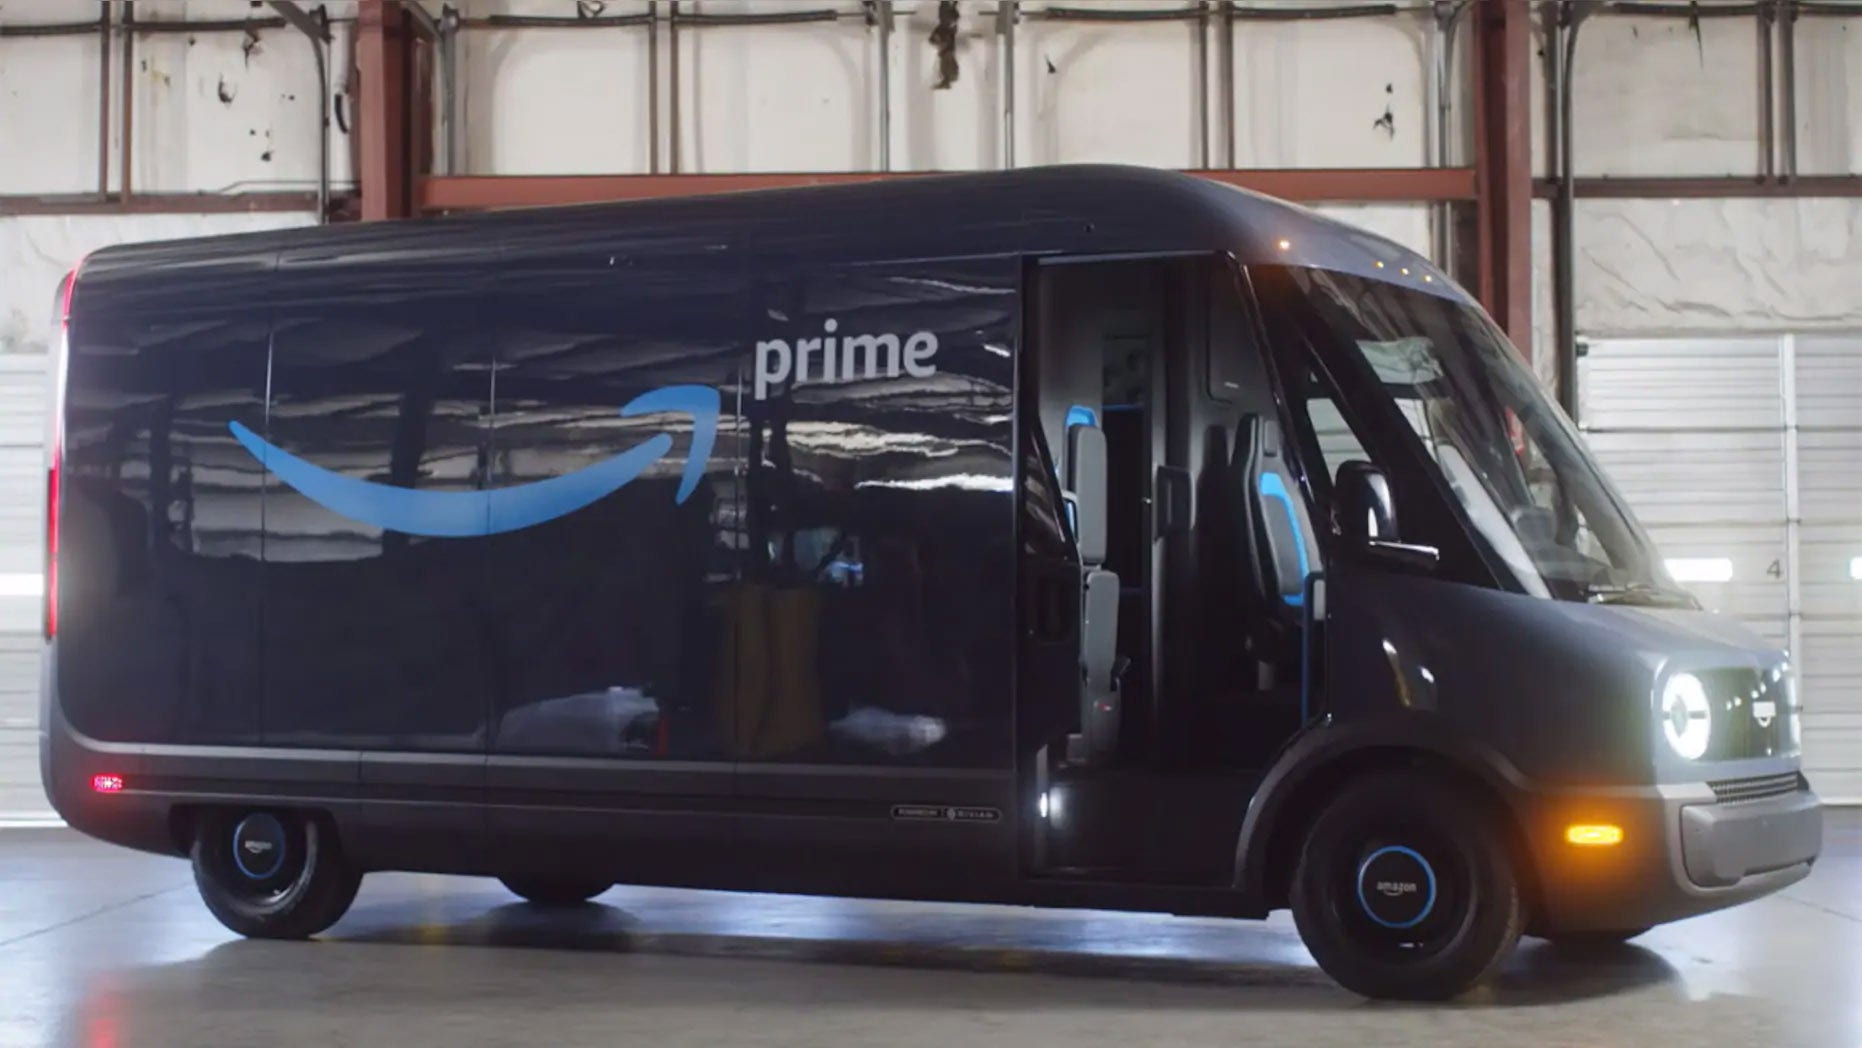 Hear it Amazon's electric delivery van is loud Fox News